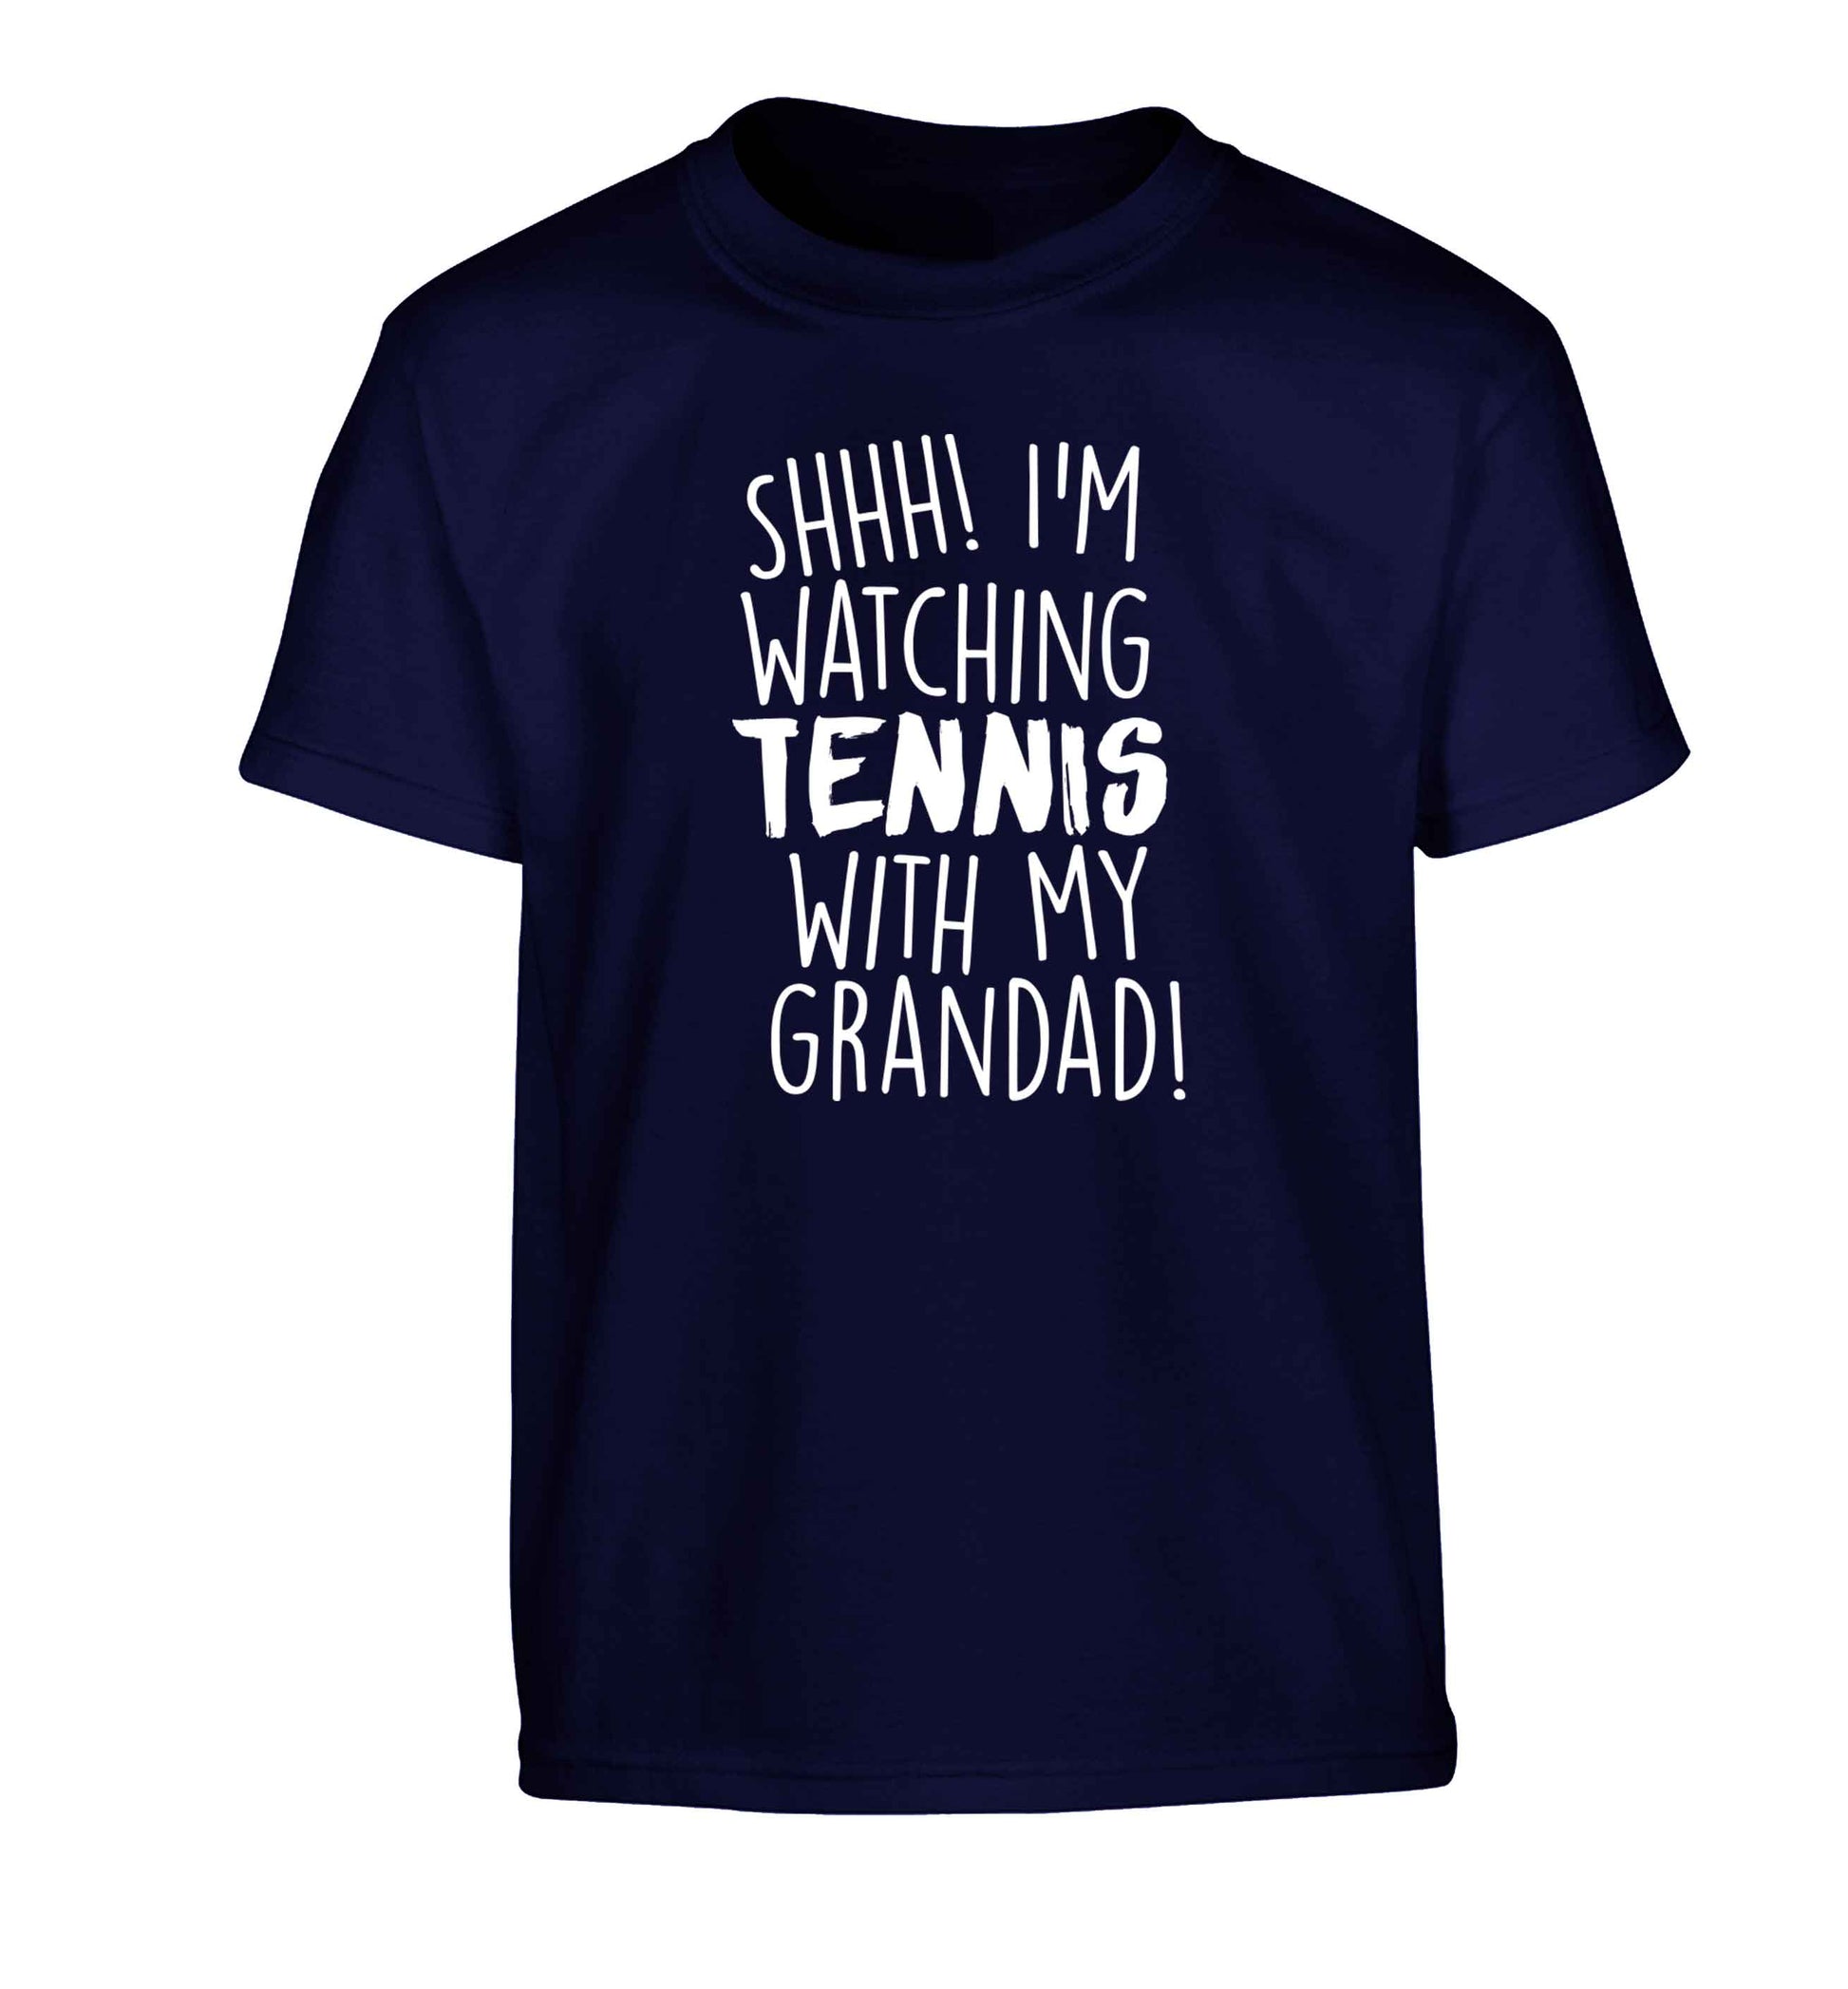 Shh! I'm watching tennis with my grandad! Children's navy Tshirt 12-13 Years